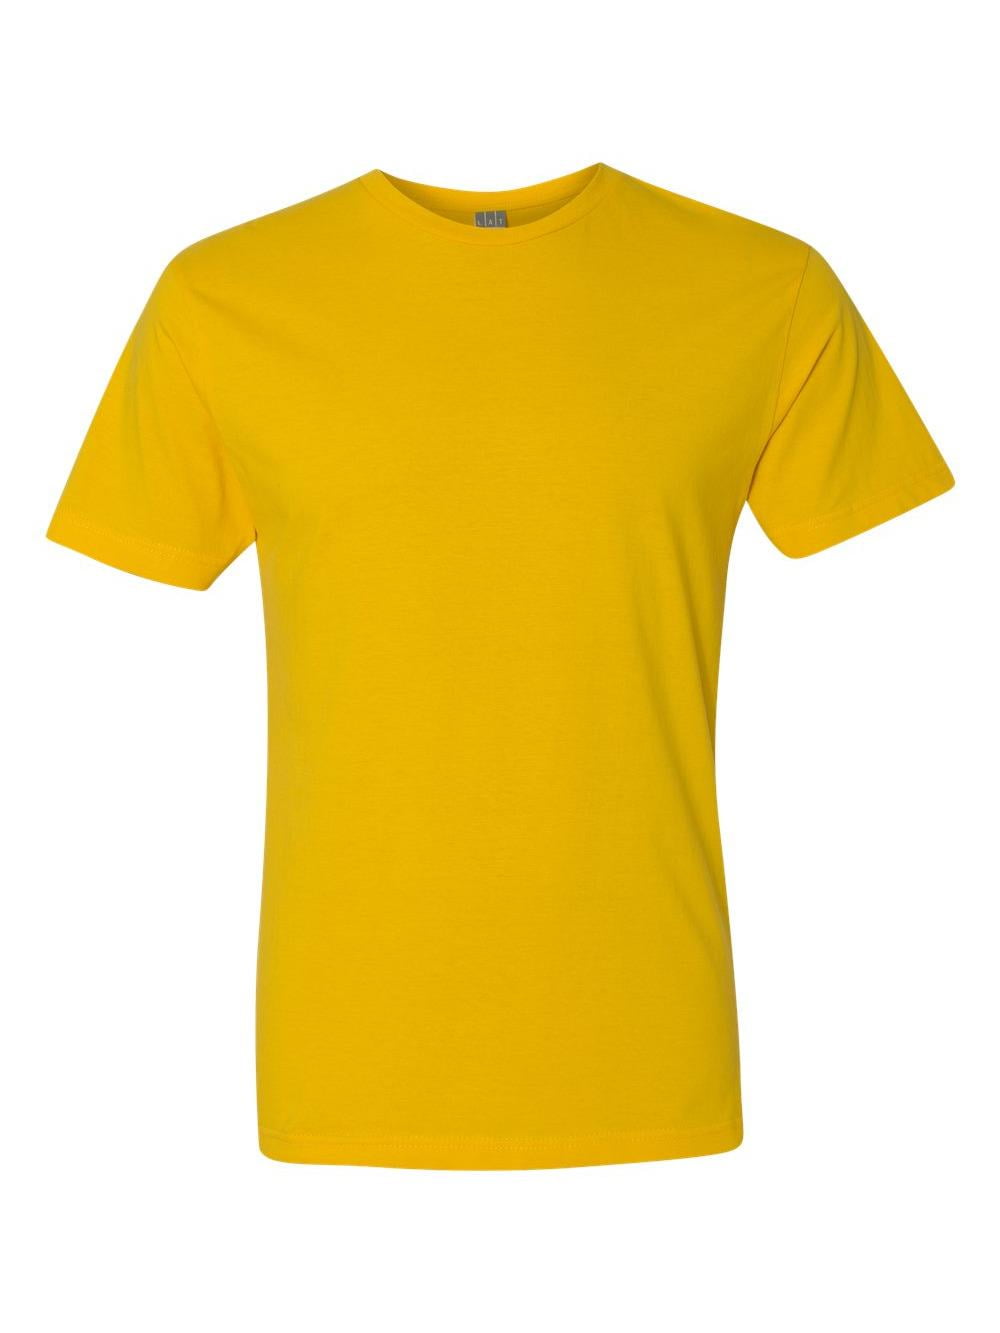 LAT - LAT T-Shirts Adult Fine Jersey Tee - Walmart.com